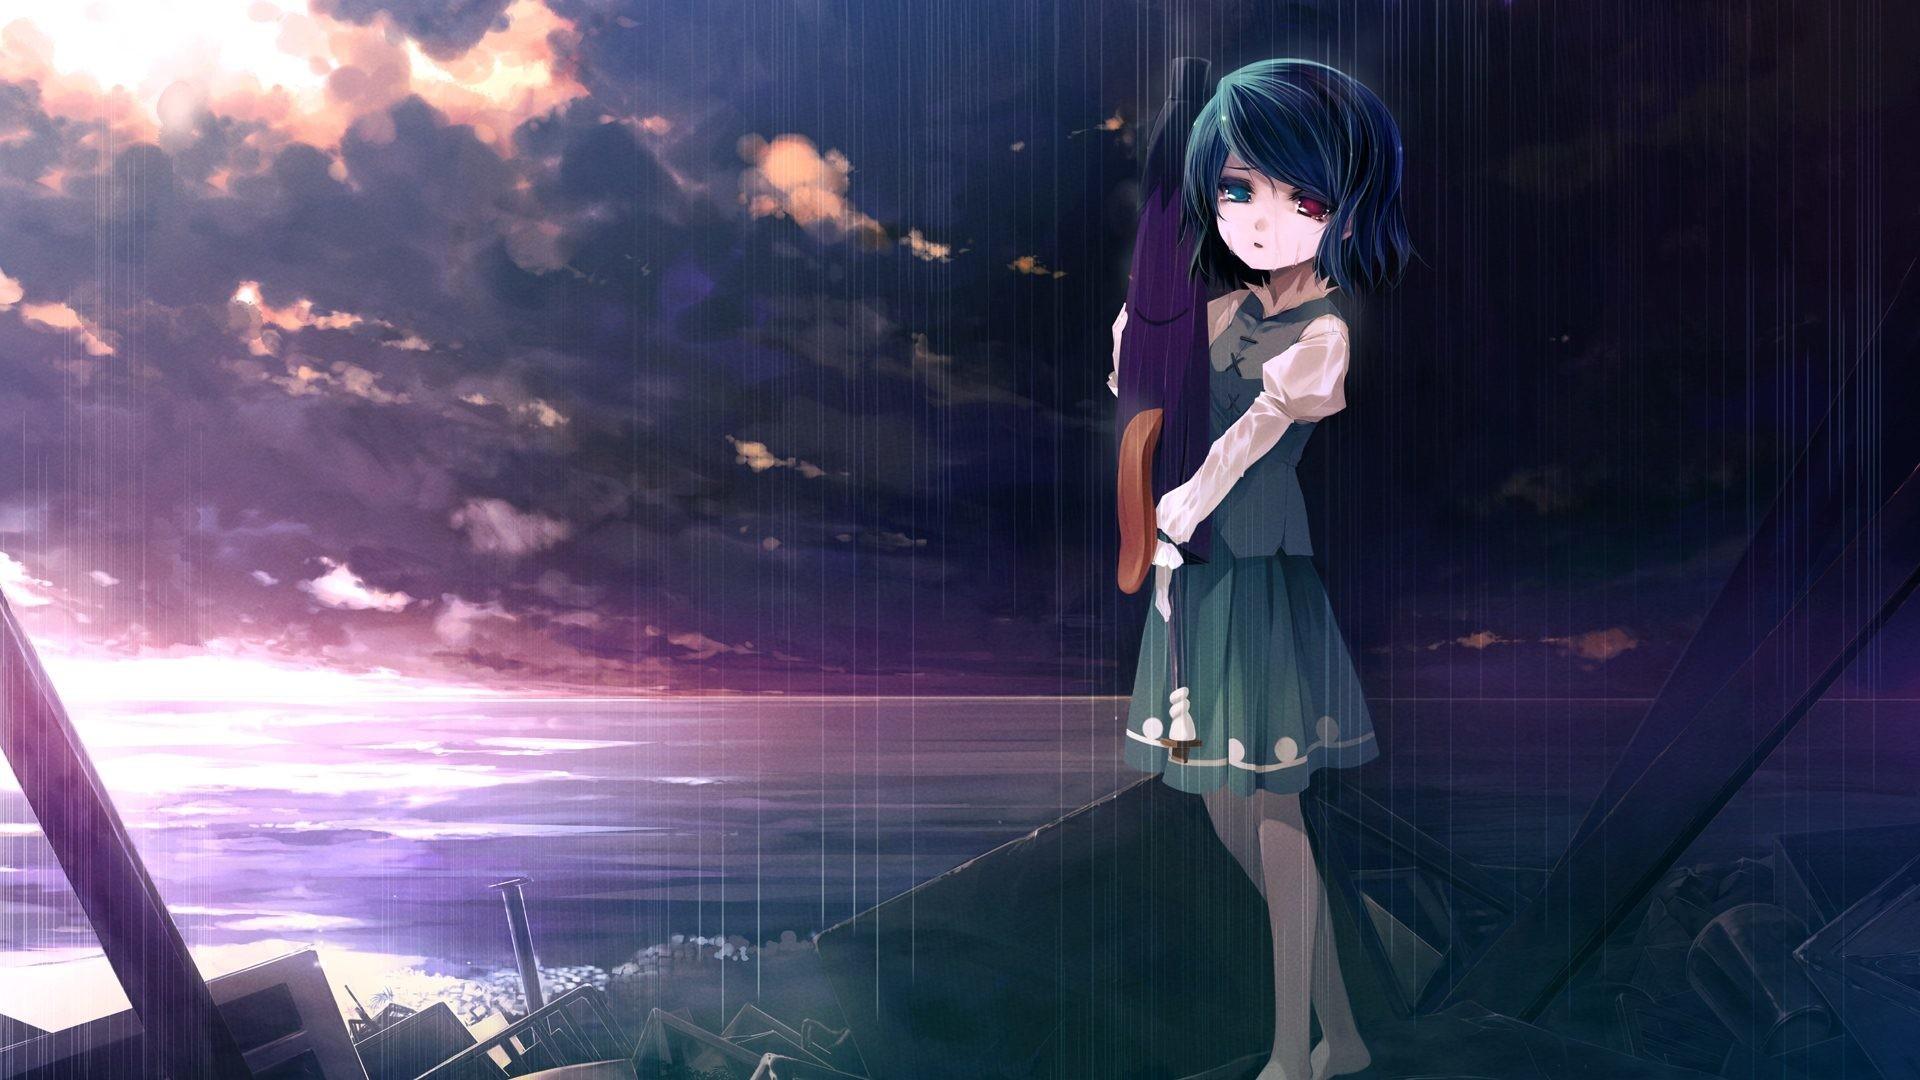 Depressed Anime Girl 1080p Wallpapers - Wallpaper Cave